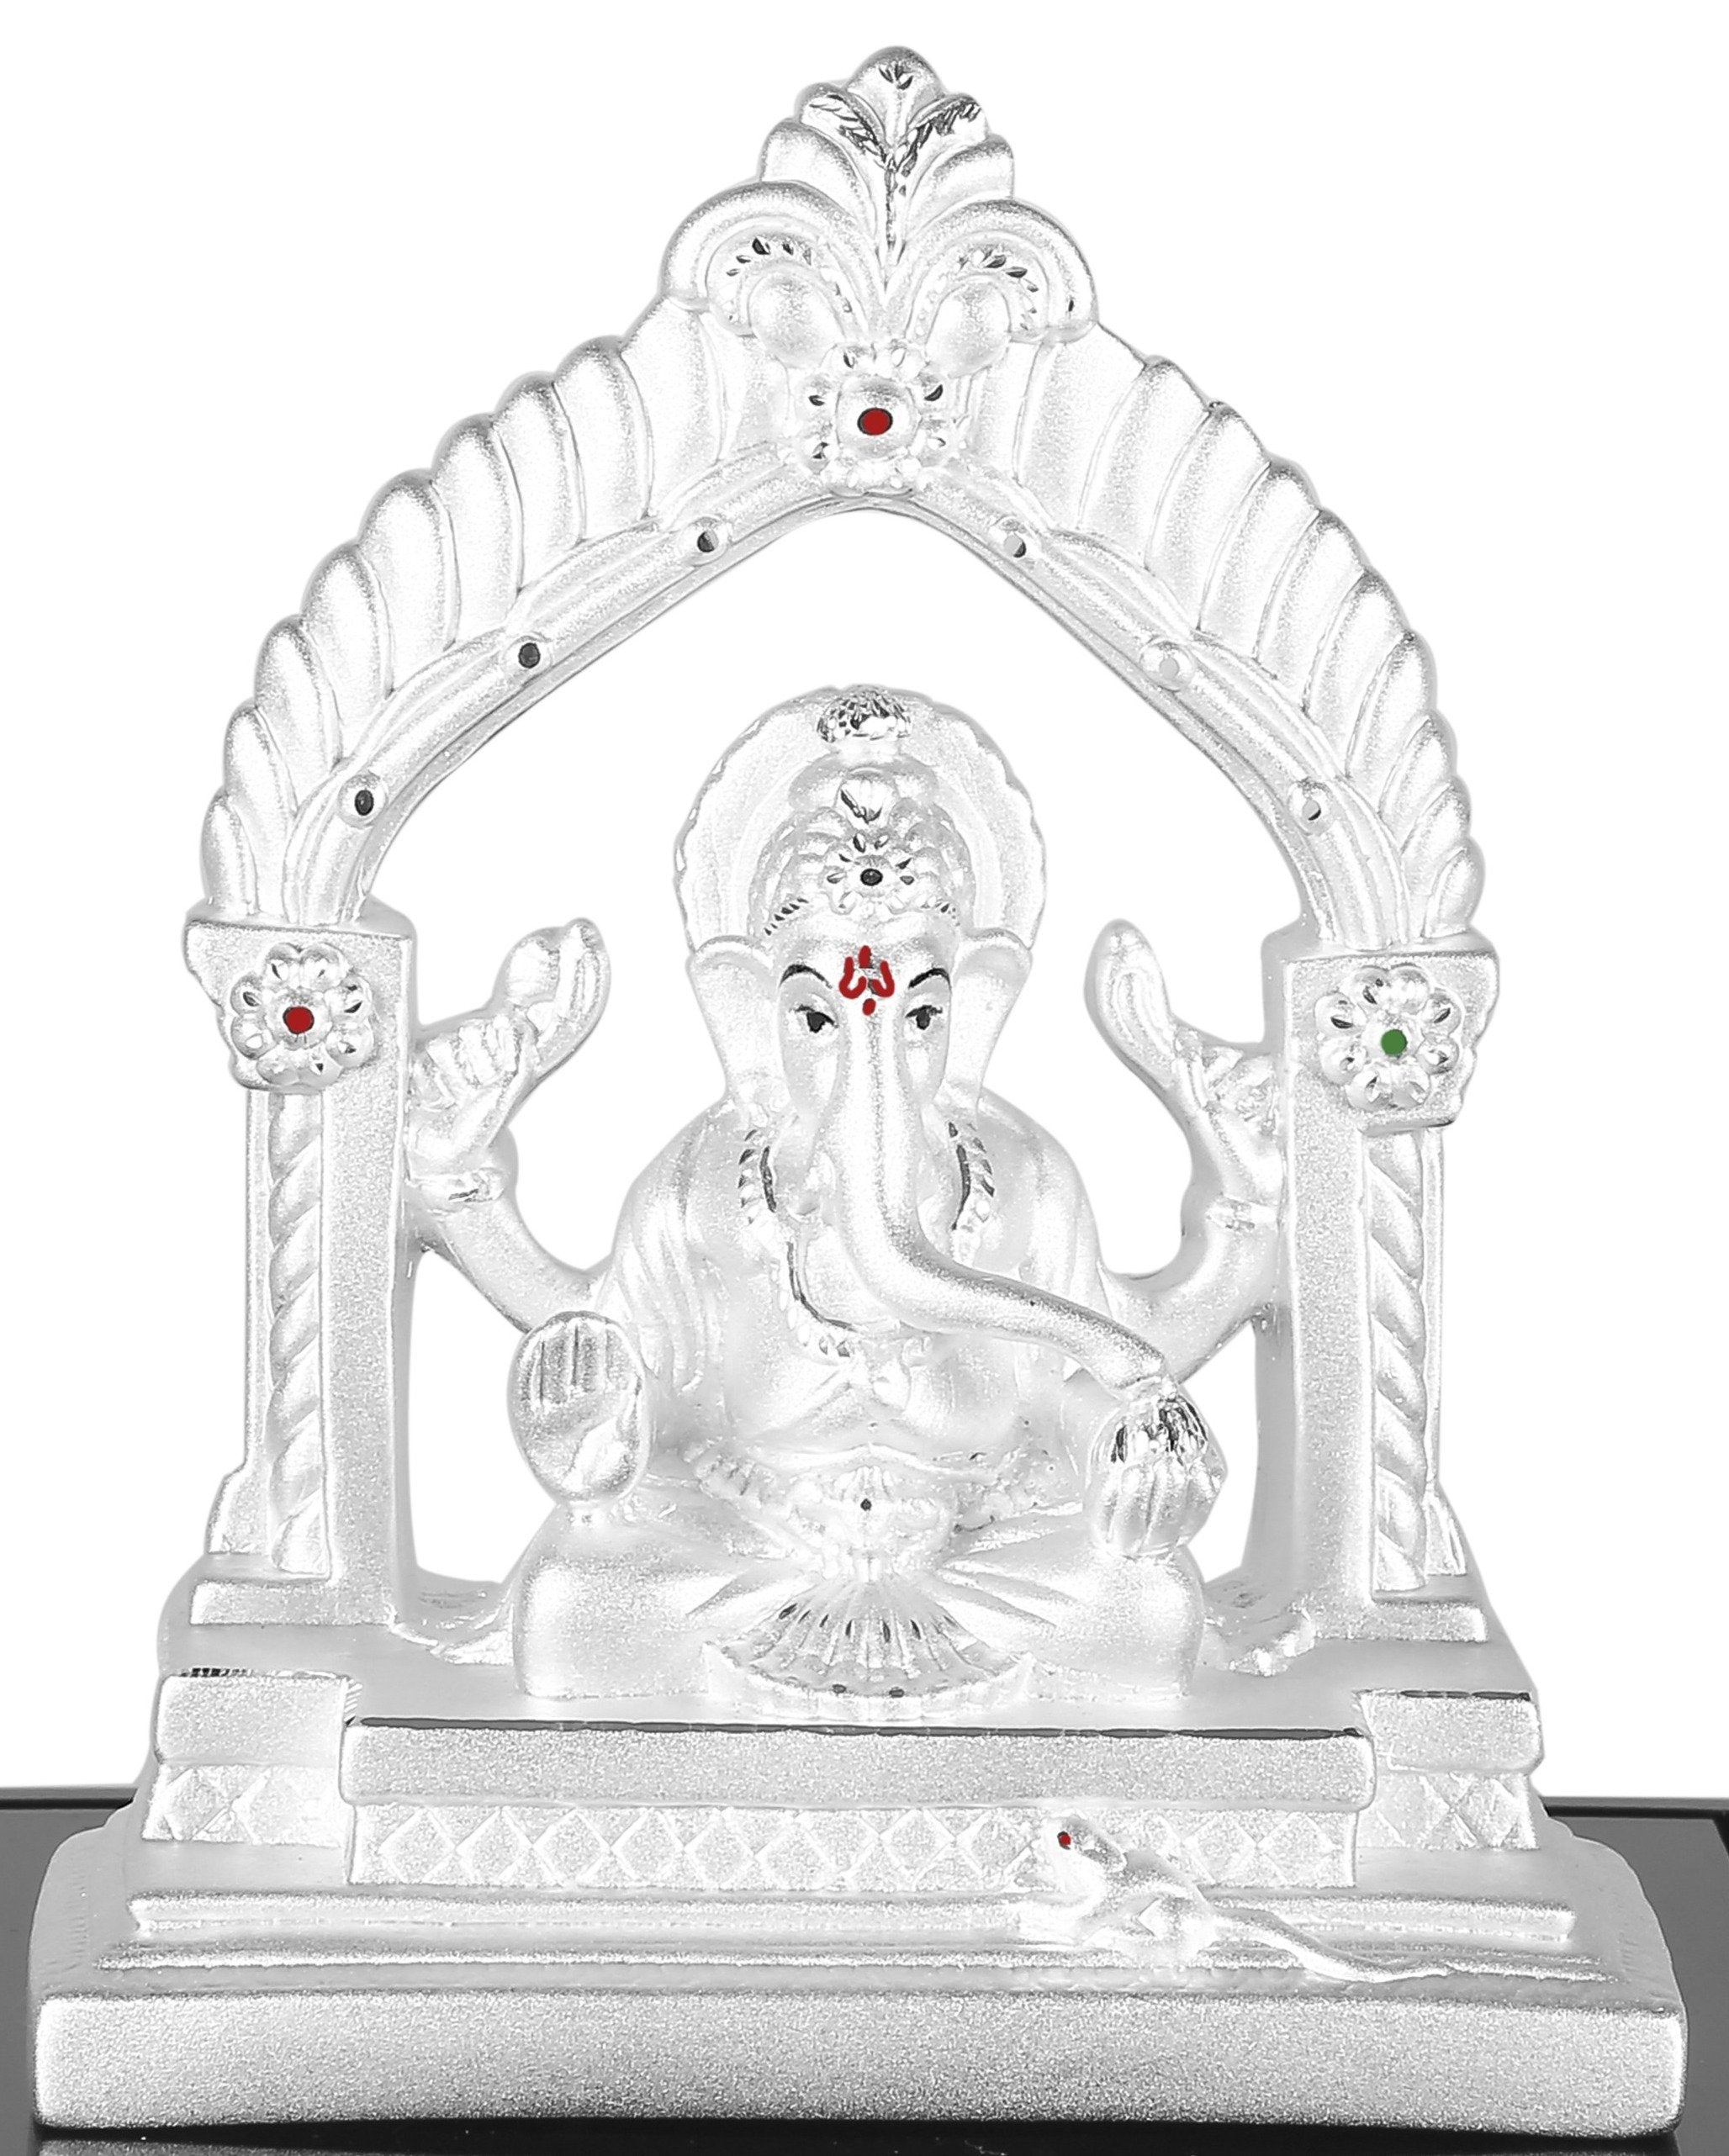 999 Pure Silver Ganesha Idol By Krysaliis Isvara - Krign04 Idols